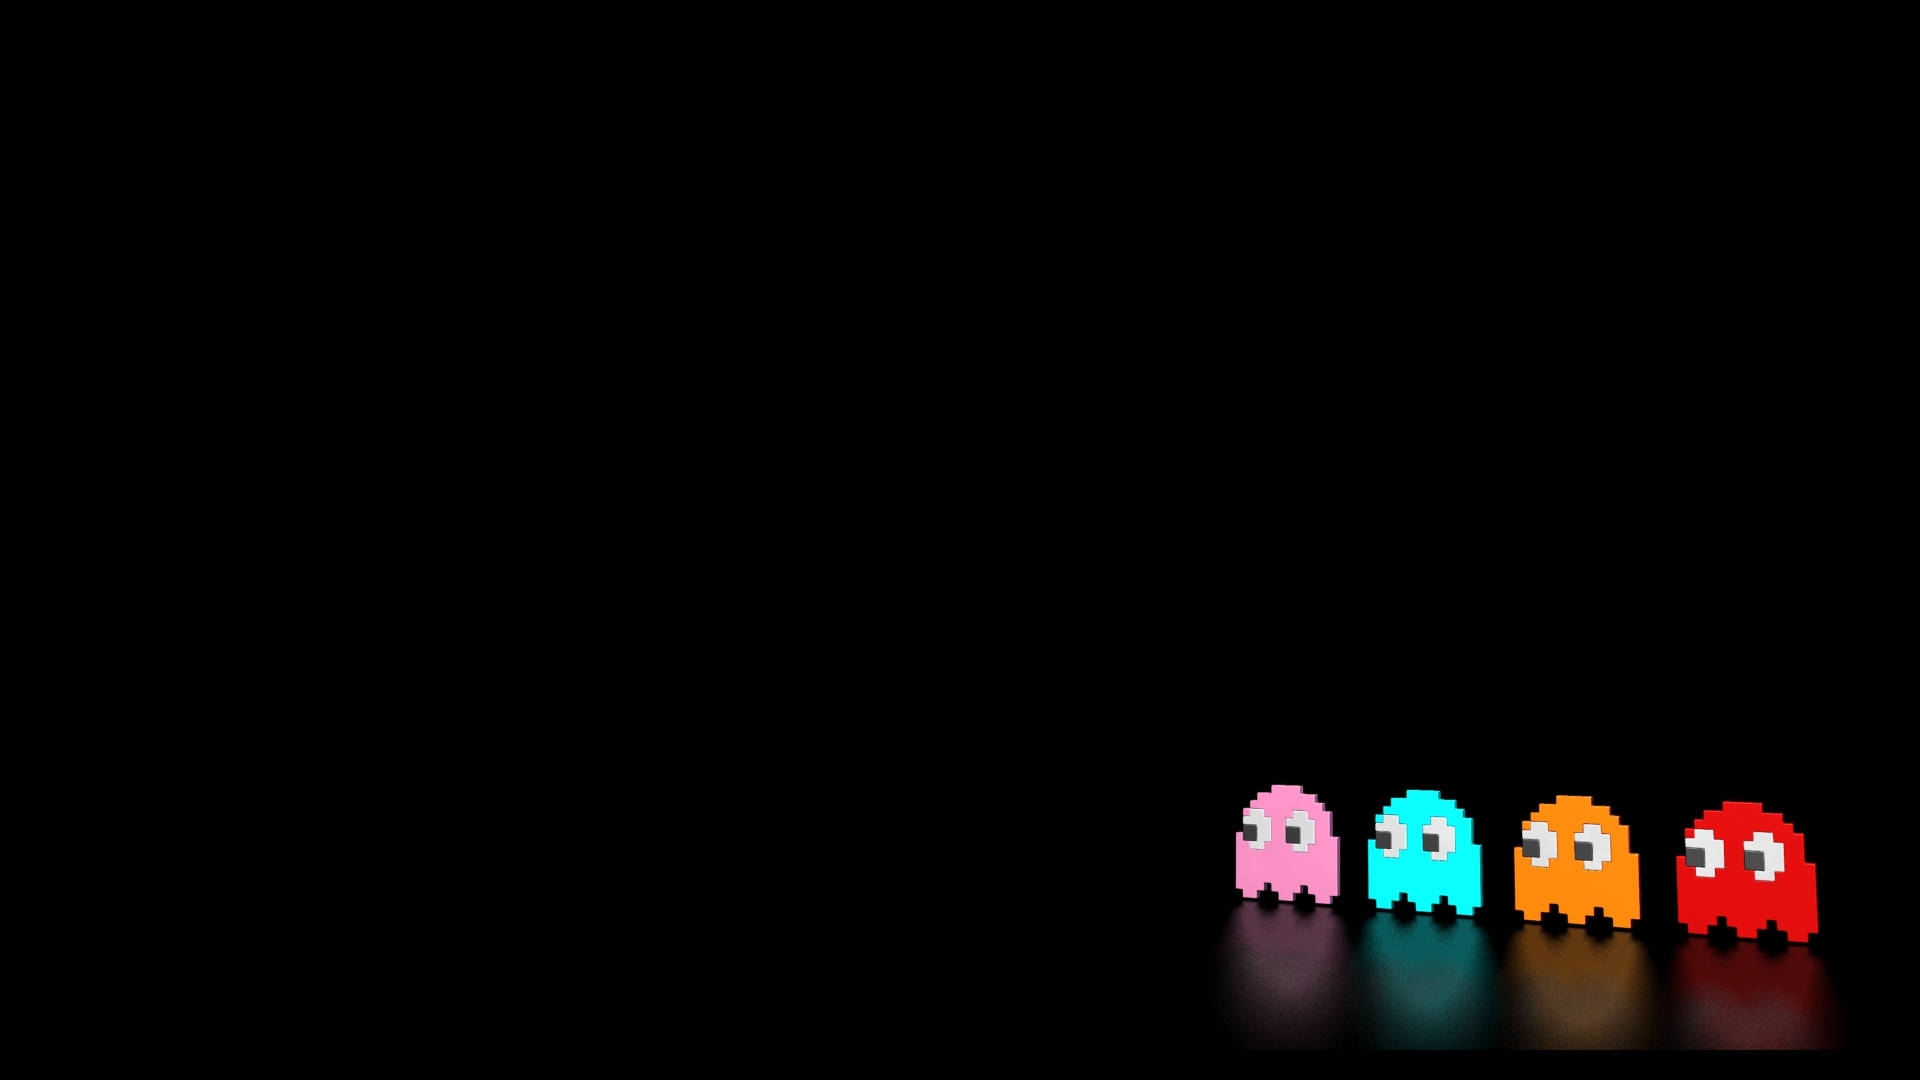 Farverige spøgelseskarakterer fra Pac Man videospillet Wallpaper